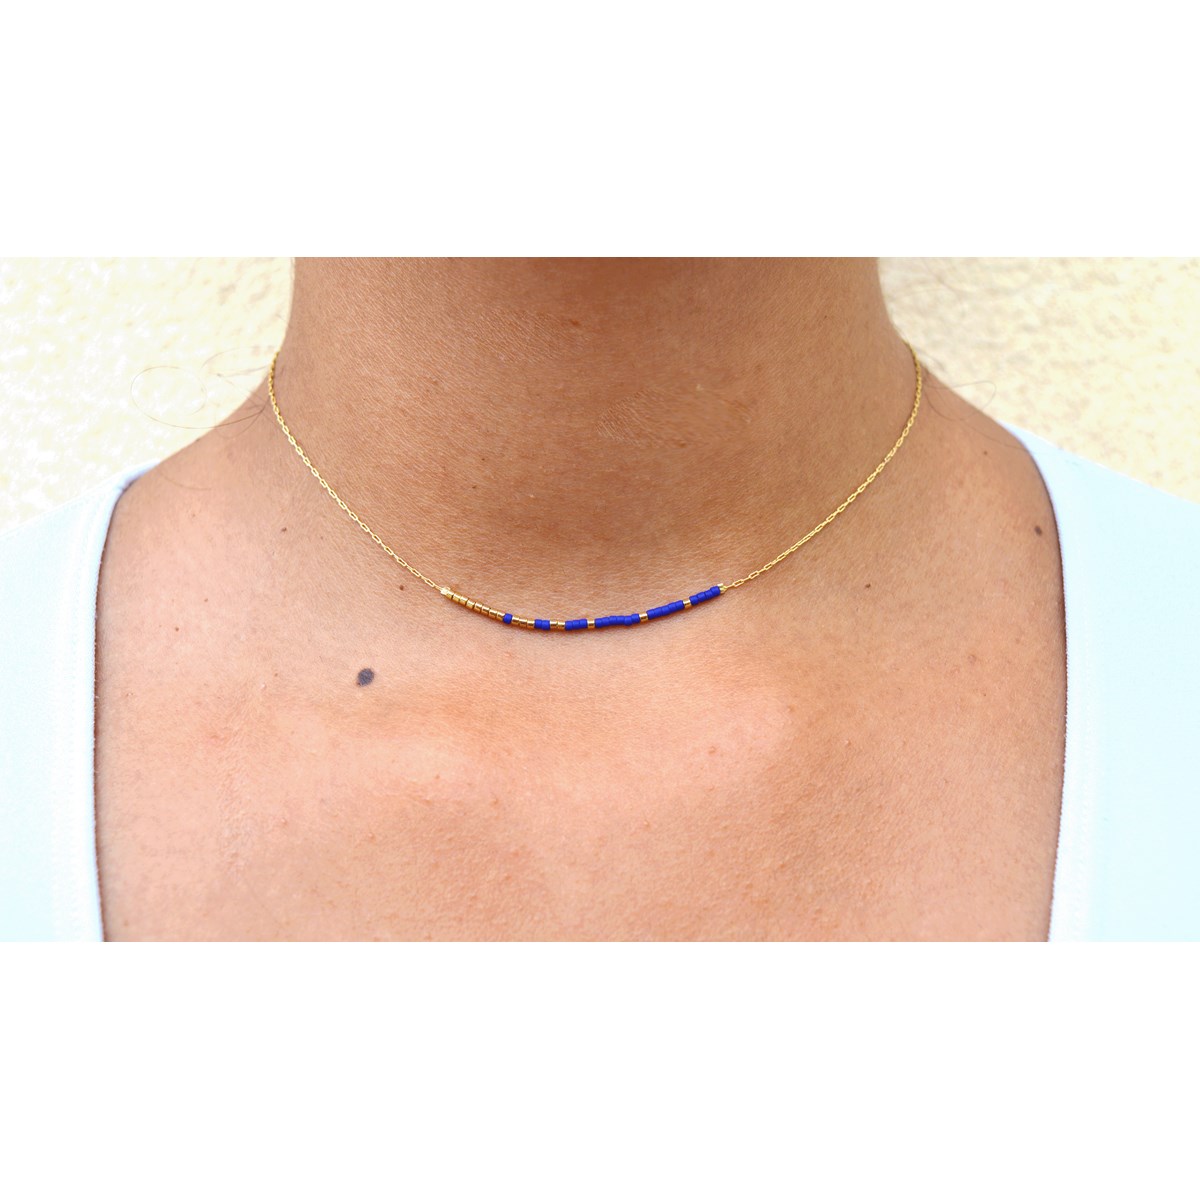 Collier femme minimaliste délicat chaîne ultra fine perle miyuki-Plaqué or - vue 2